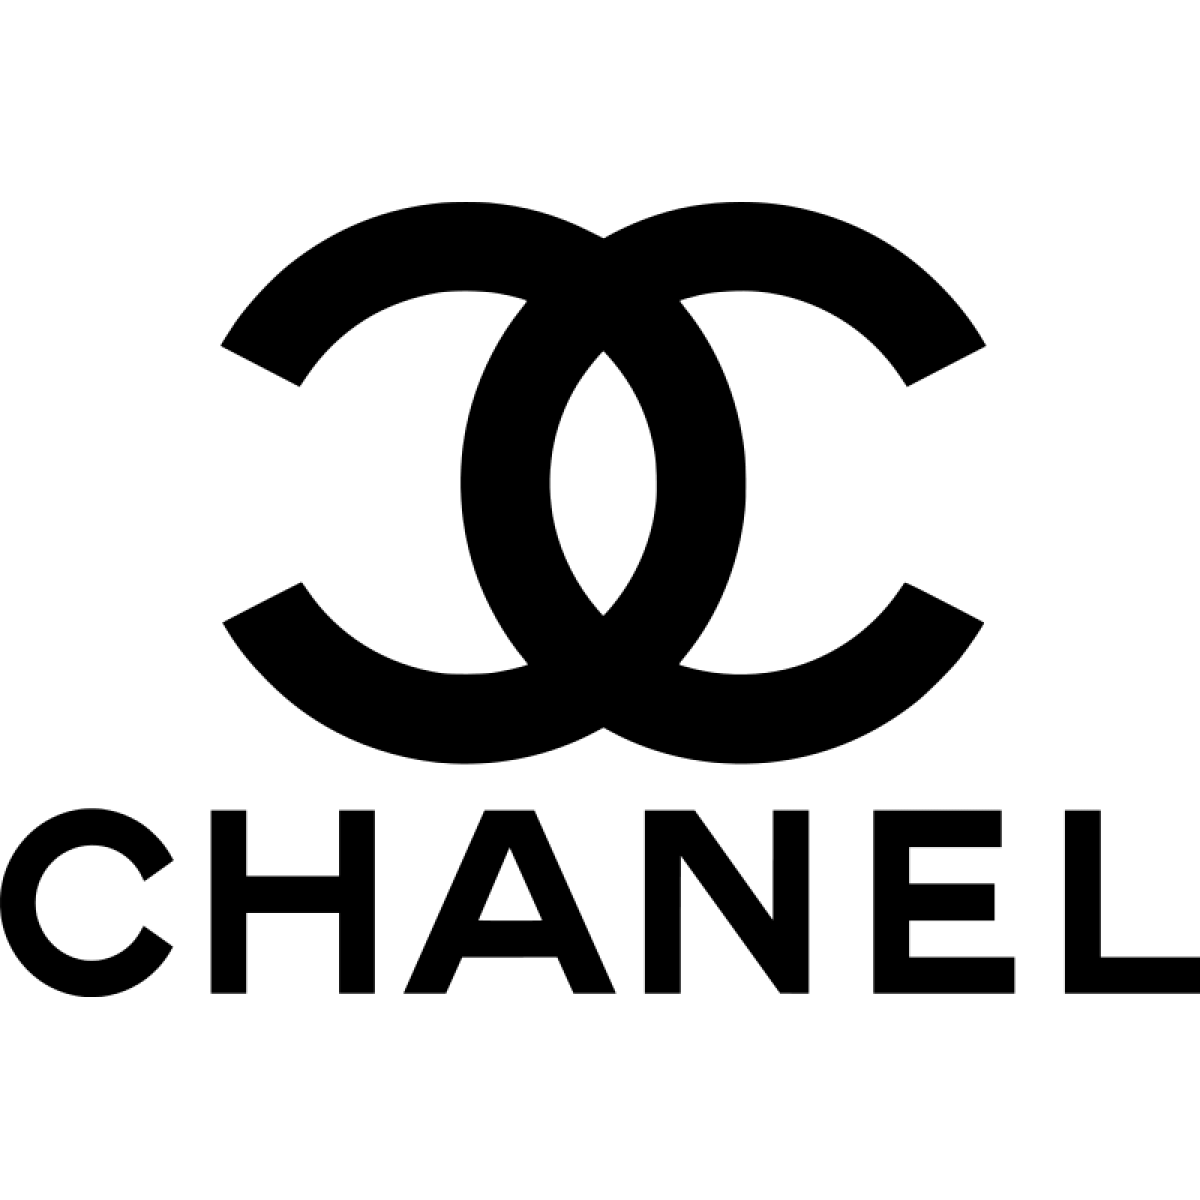 Google Channel Logo - Channel logo png 2 PNG Image